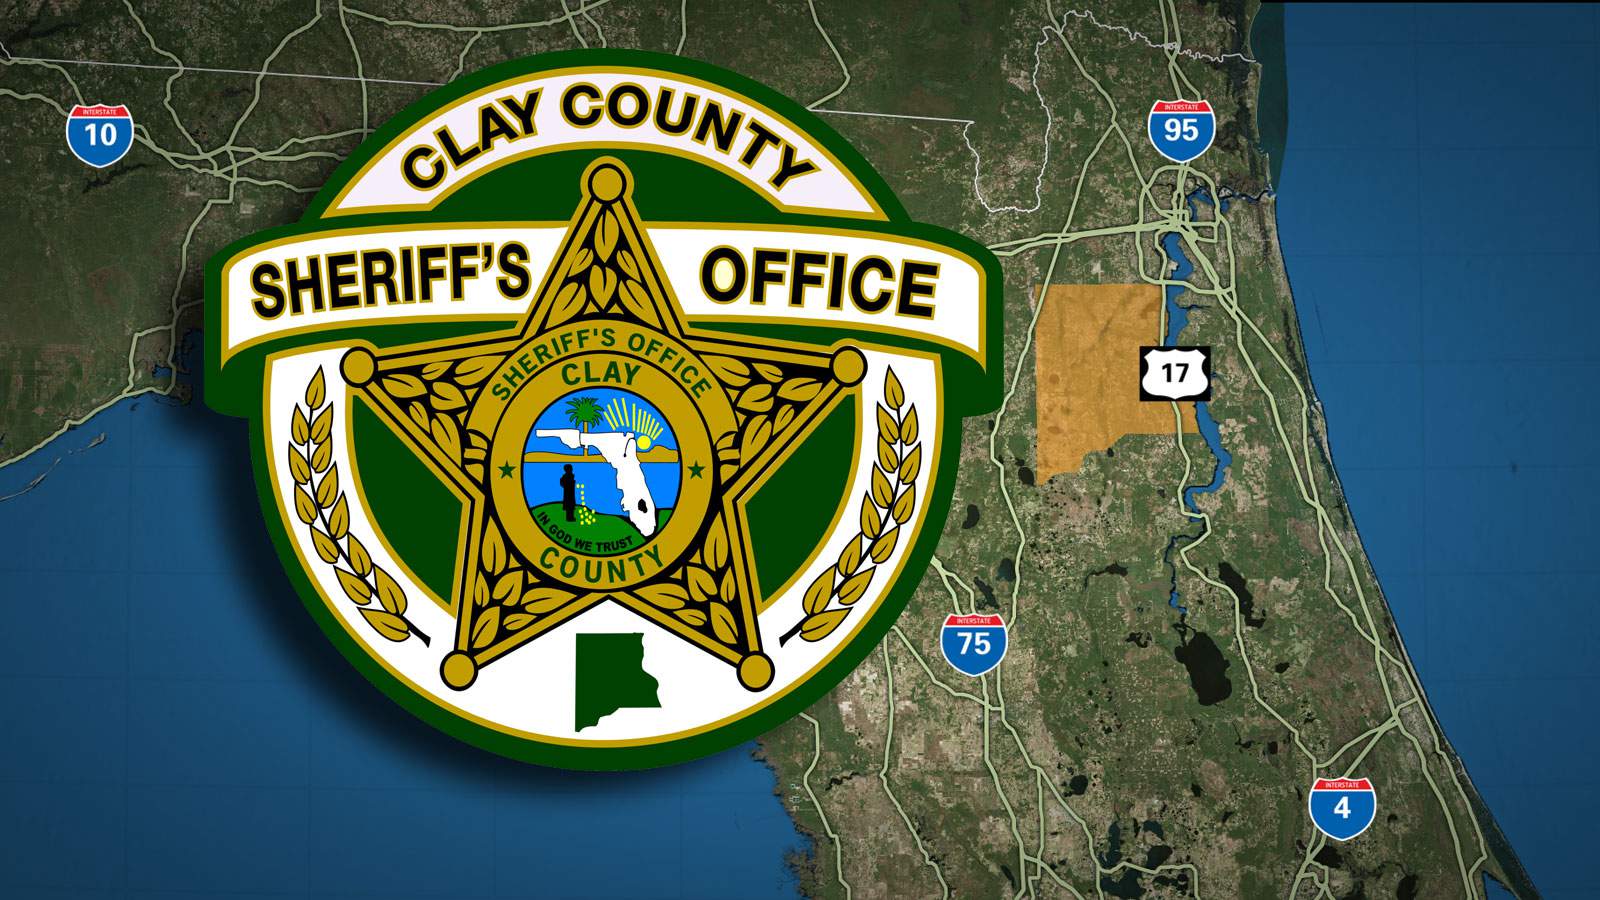 Gov. DeSantis names FDLE’s Matt Walsh as interim sheriff of Clay County